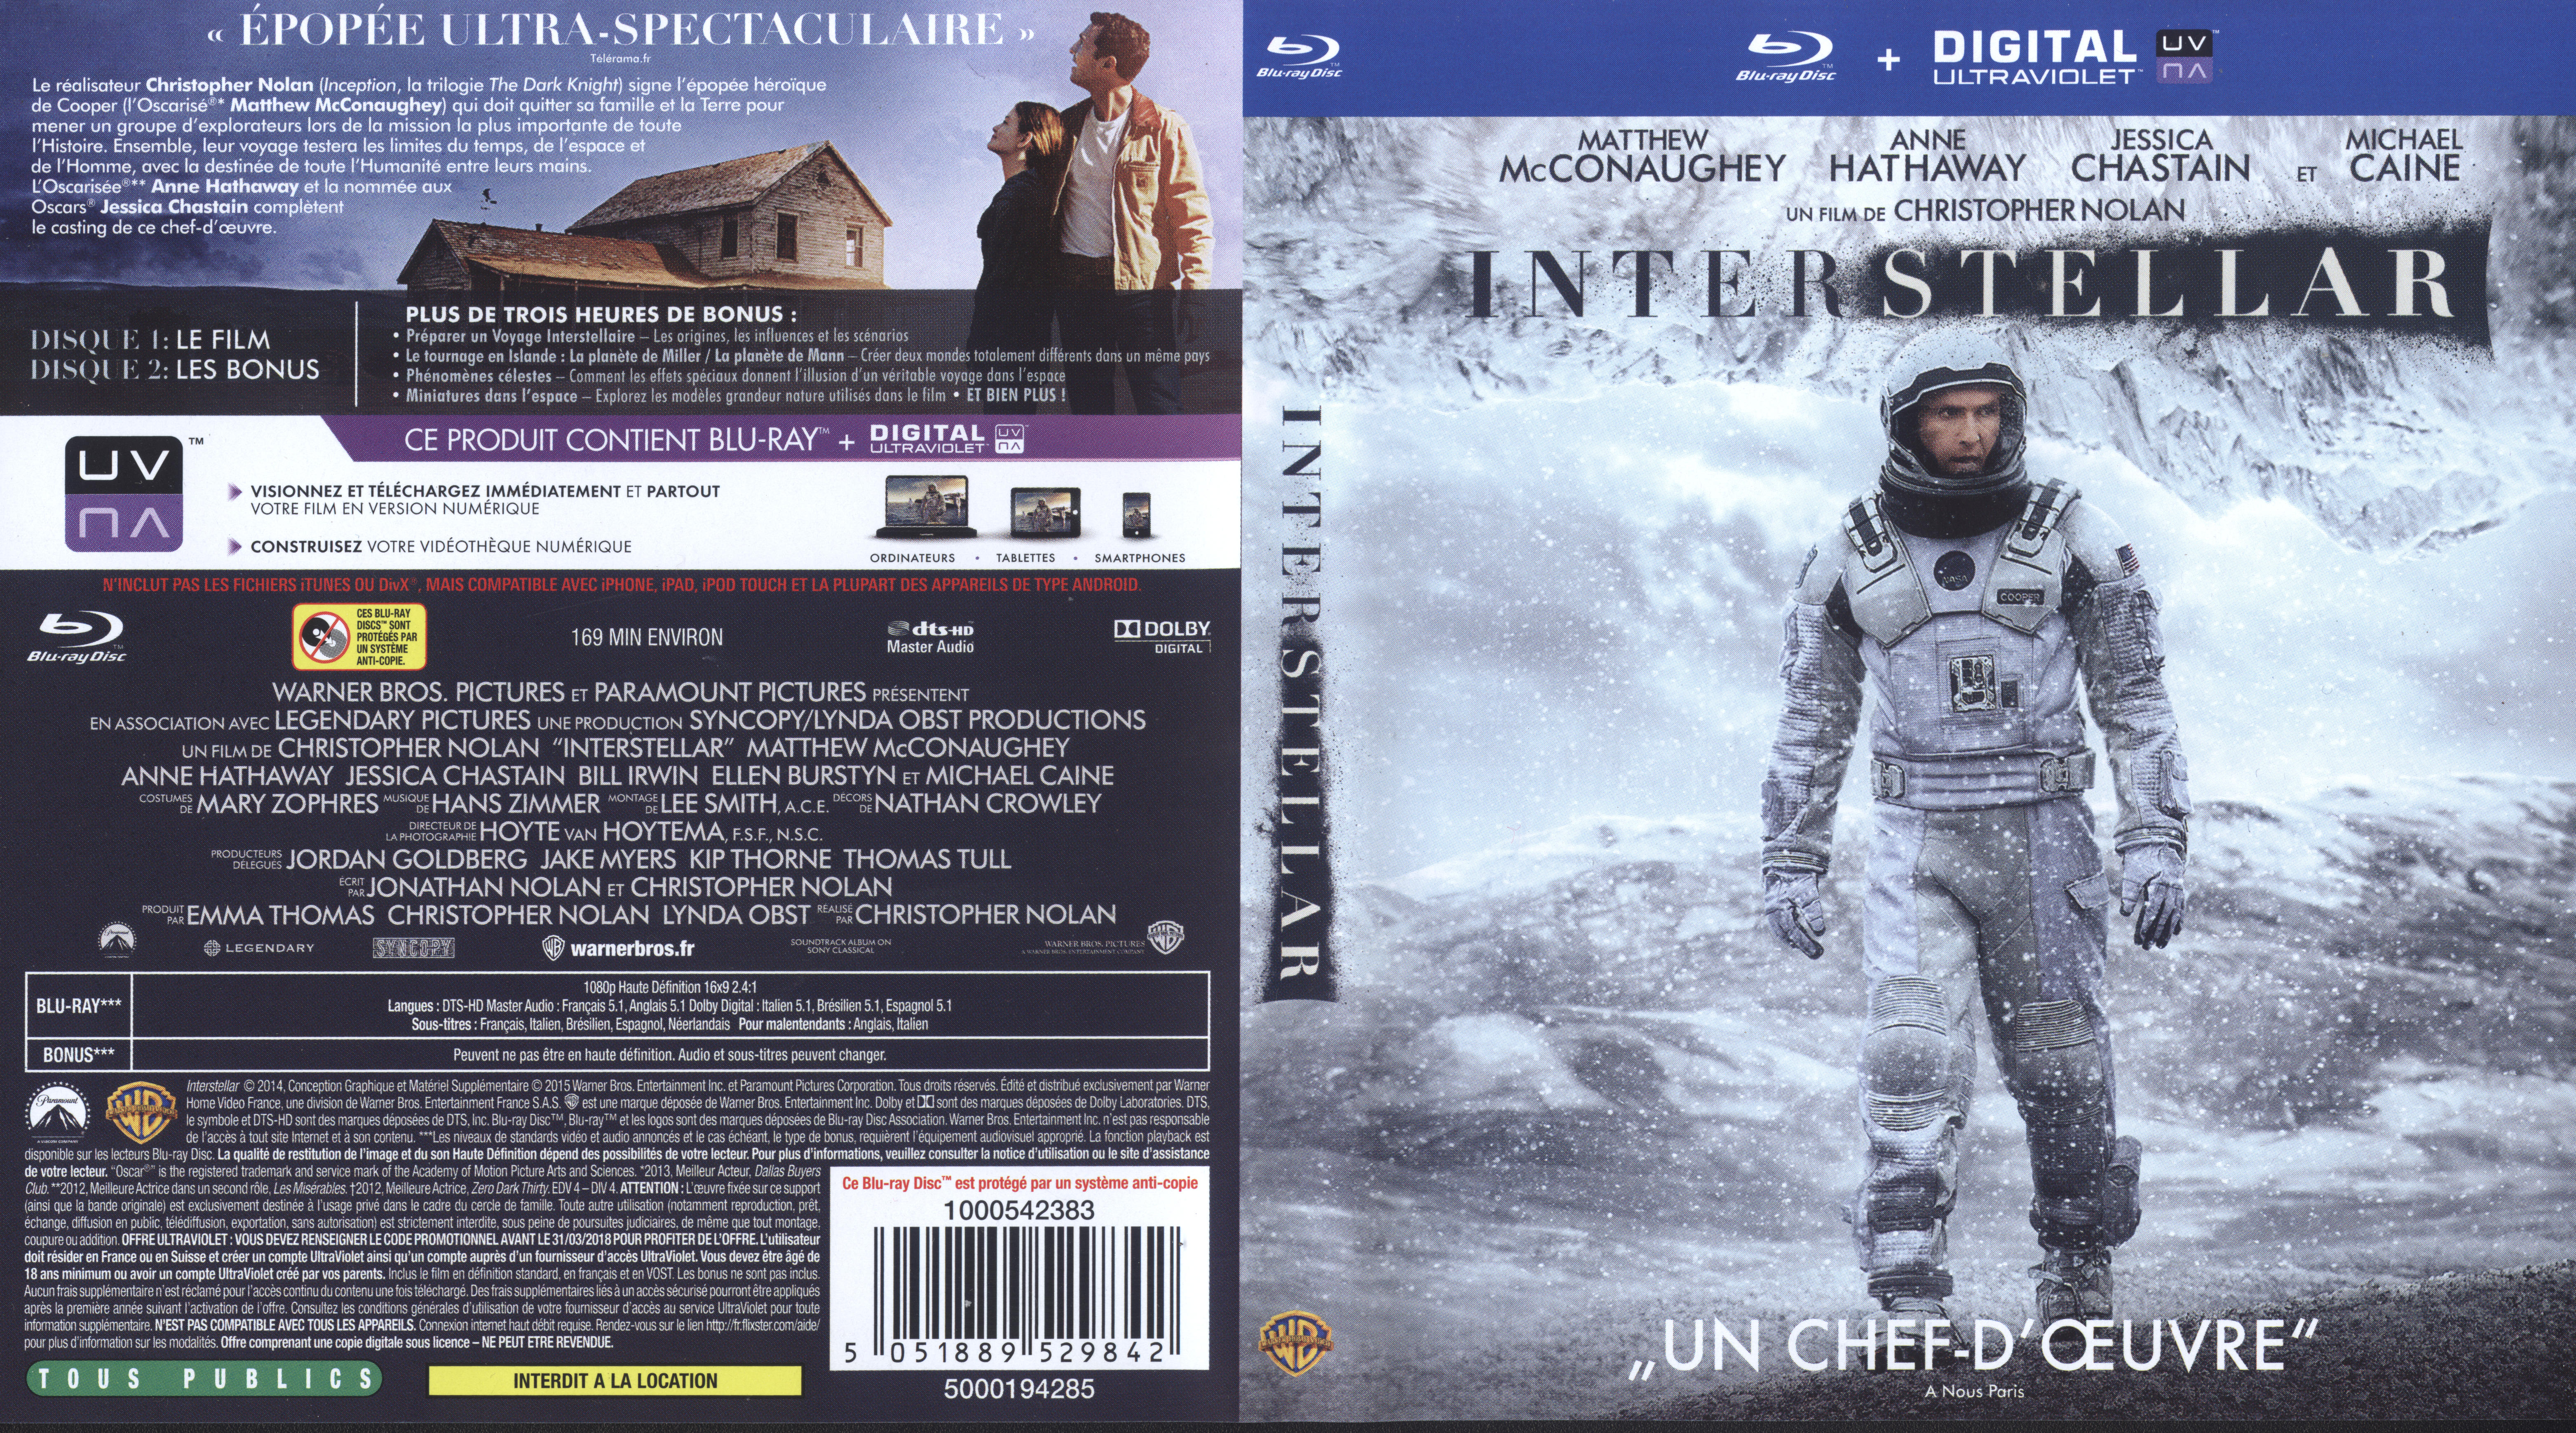 Jaquette DVD Interstellar (BLU-RAY) v3